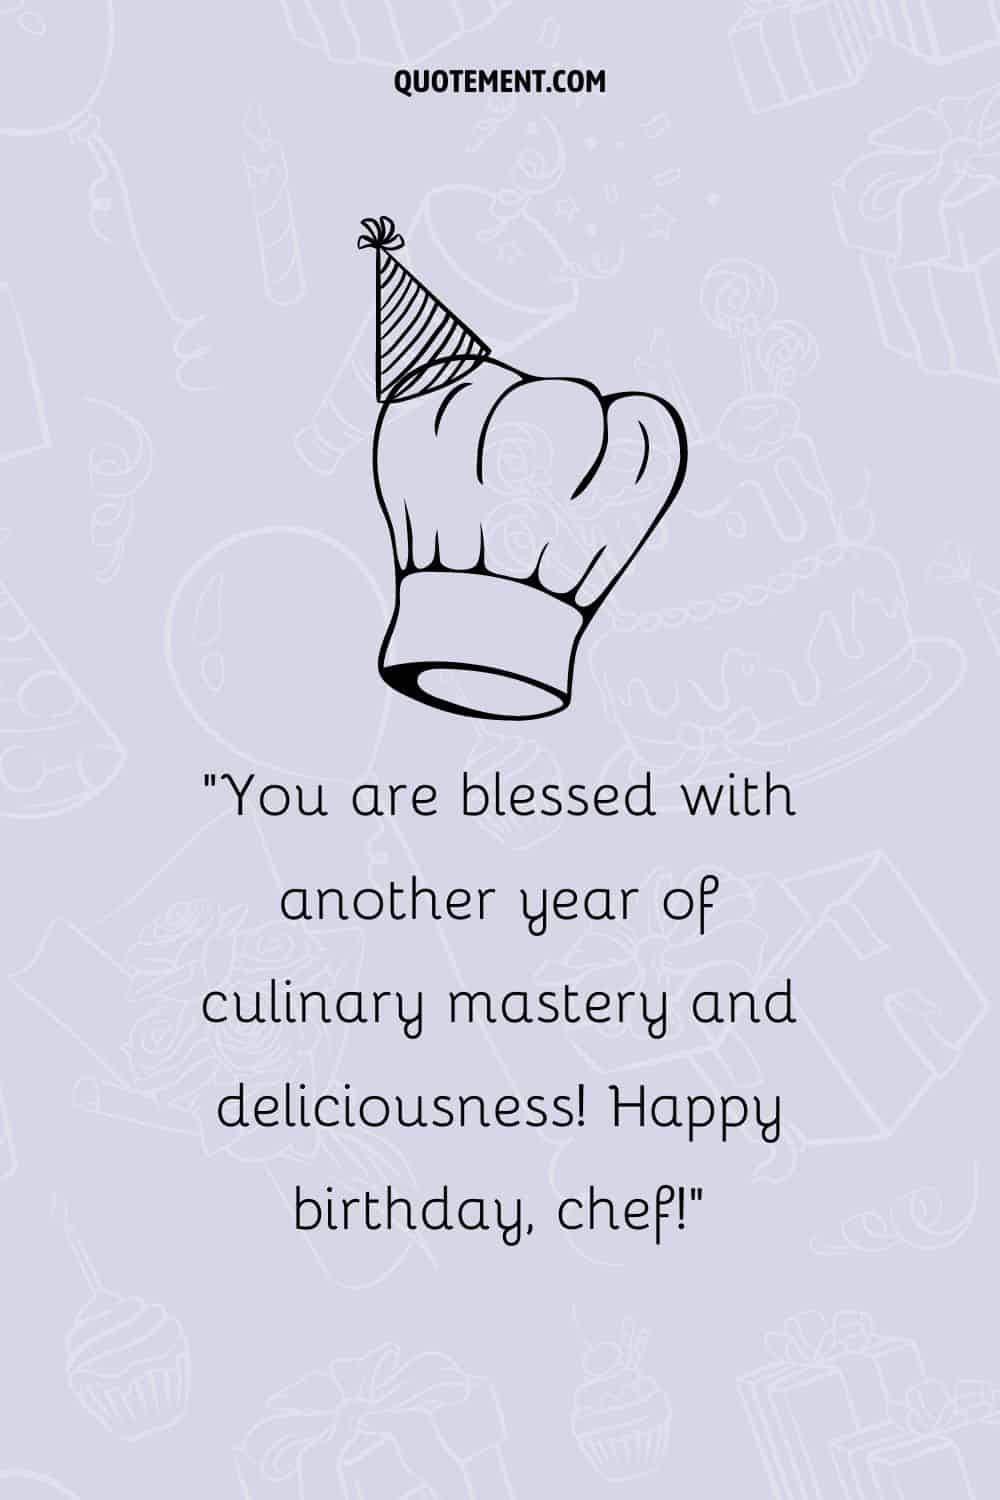 Minimalisti illustration of a chef's hat representing a happy birthday to a chef wish.
